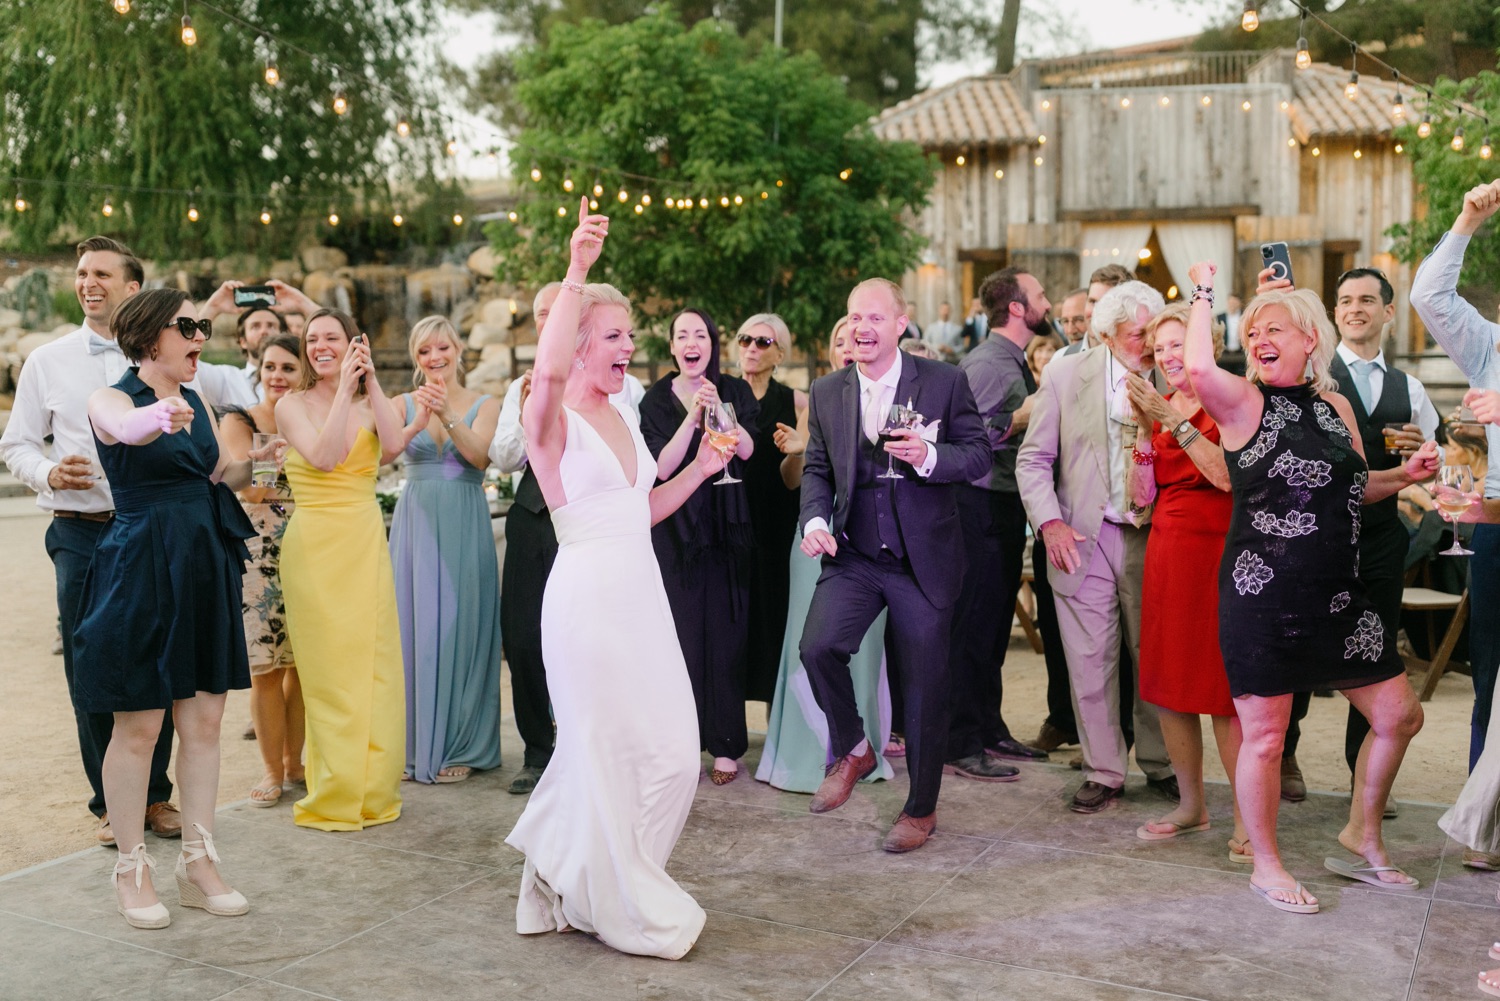 Guests dancing at Terra Mia wedding reception